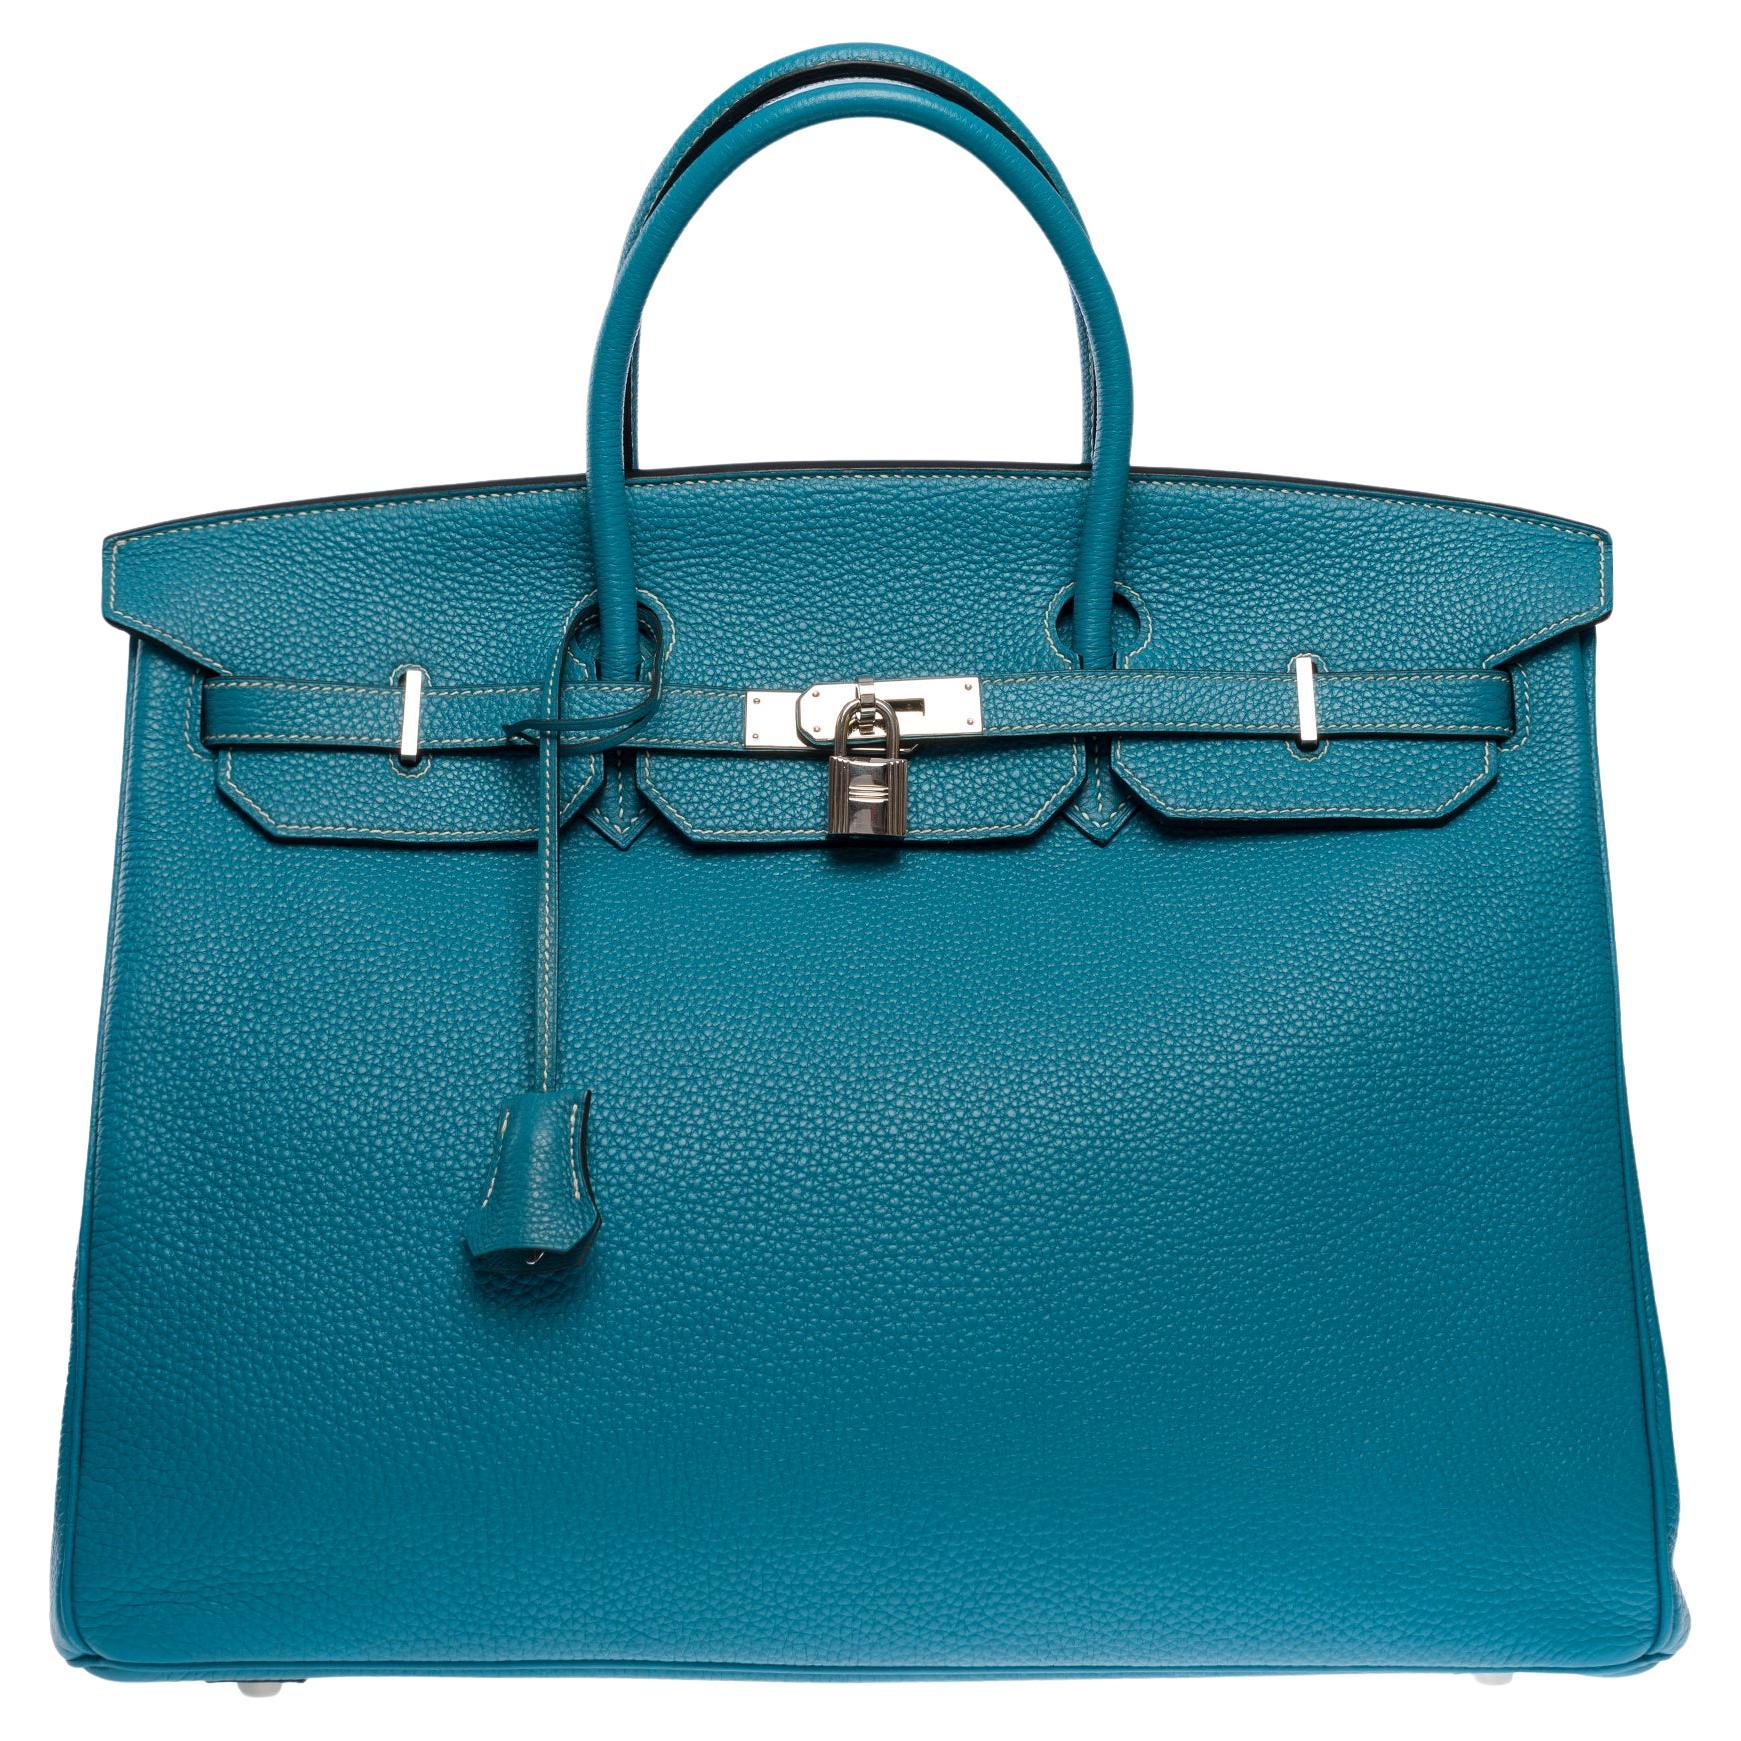 Stunning Hermes Birkin 40cm handbag in Blue Jean Togo leather, SHW